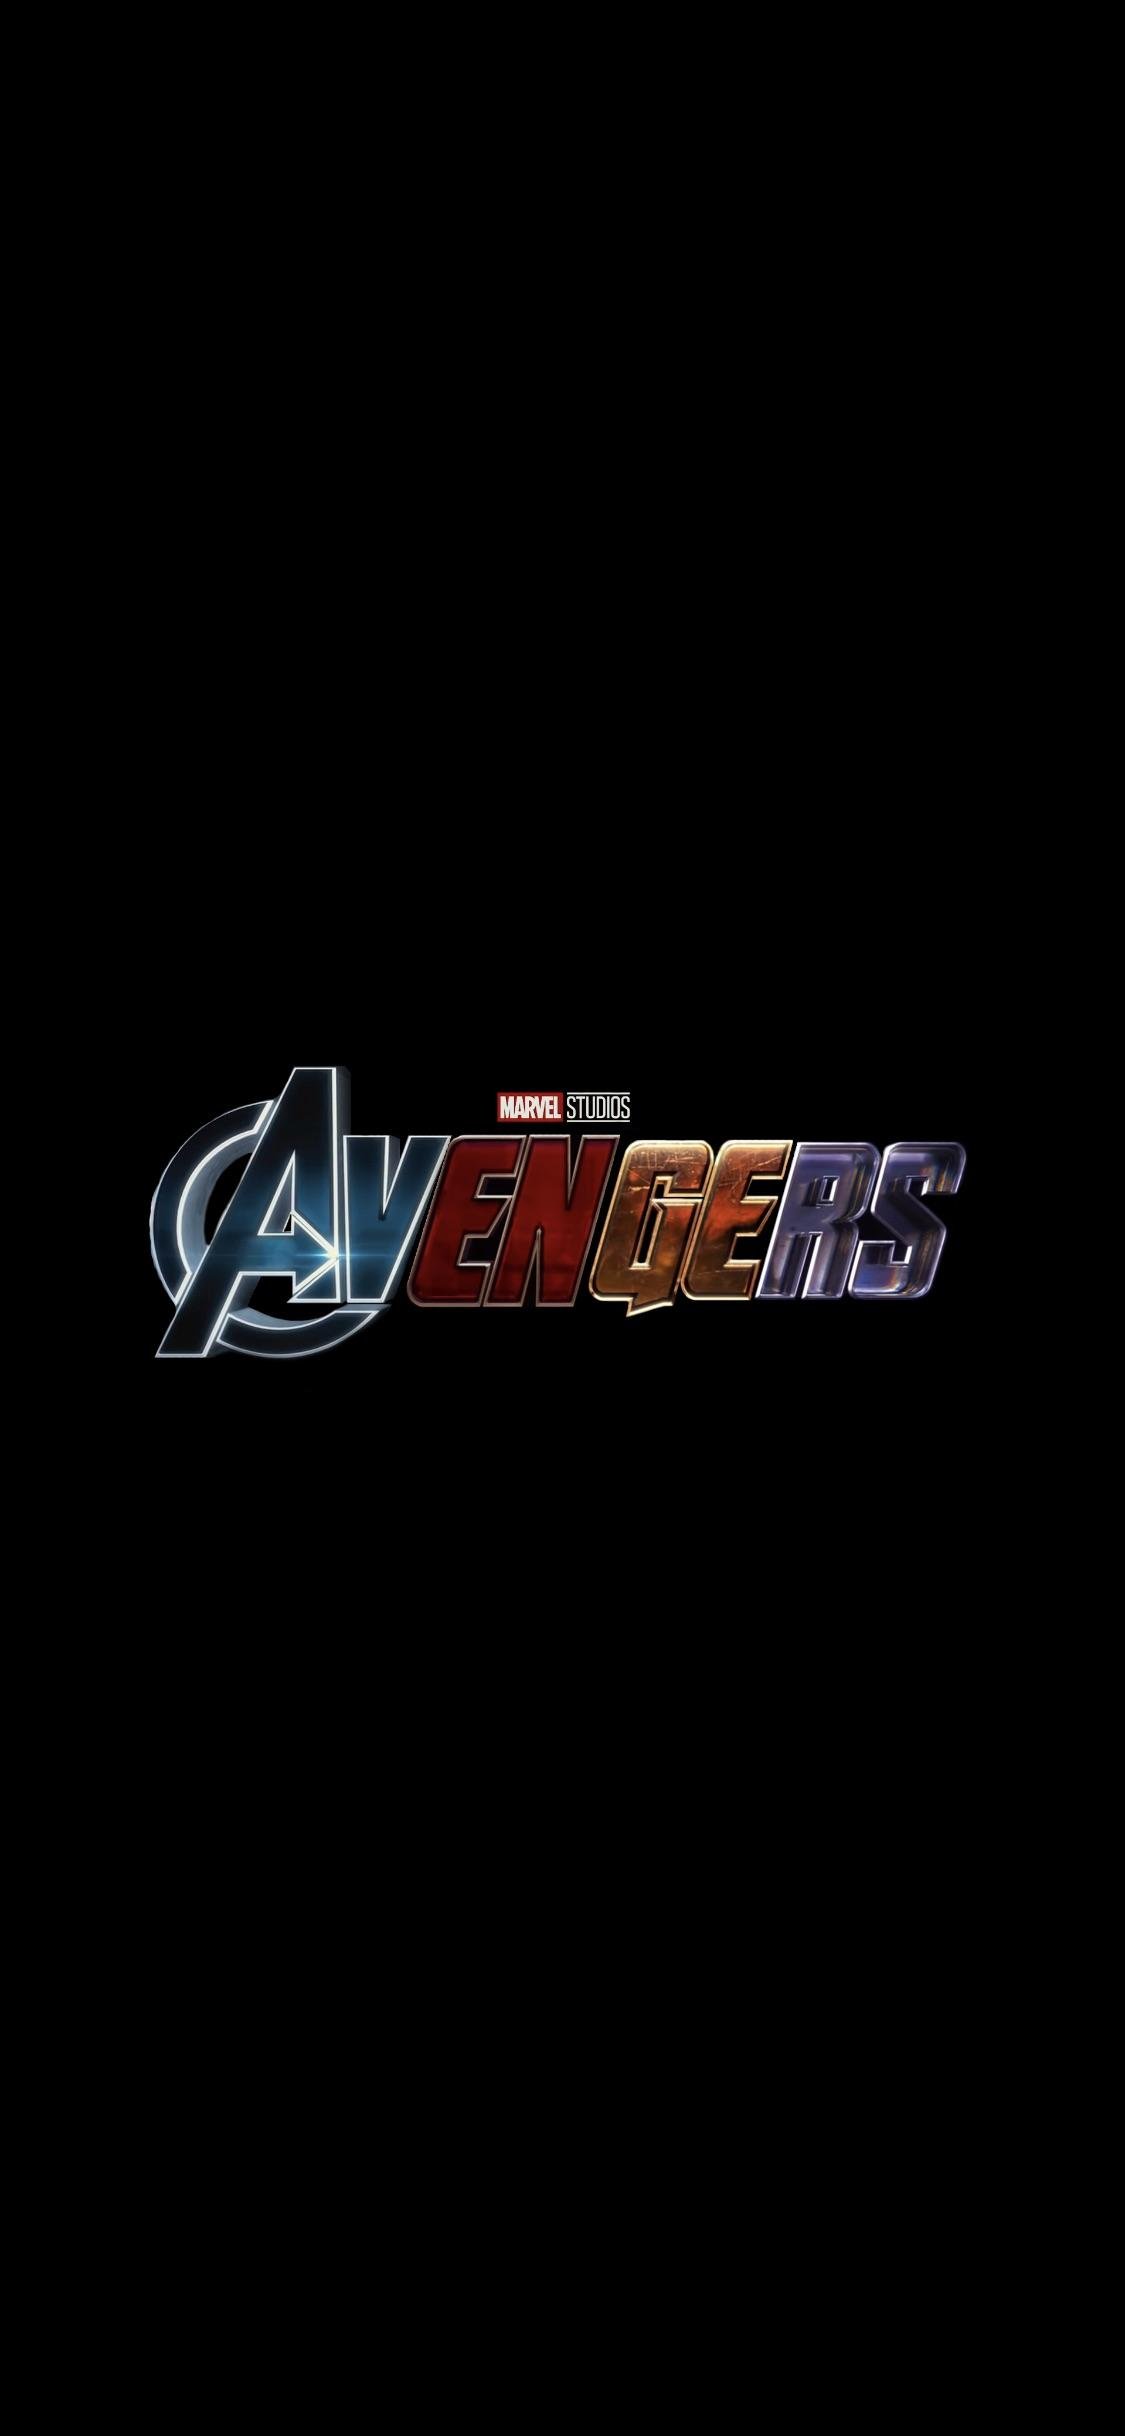 Avengers movie - black background